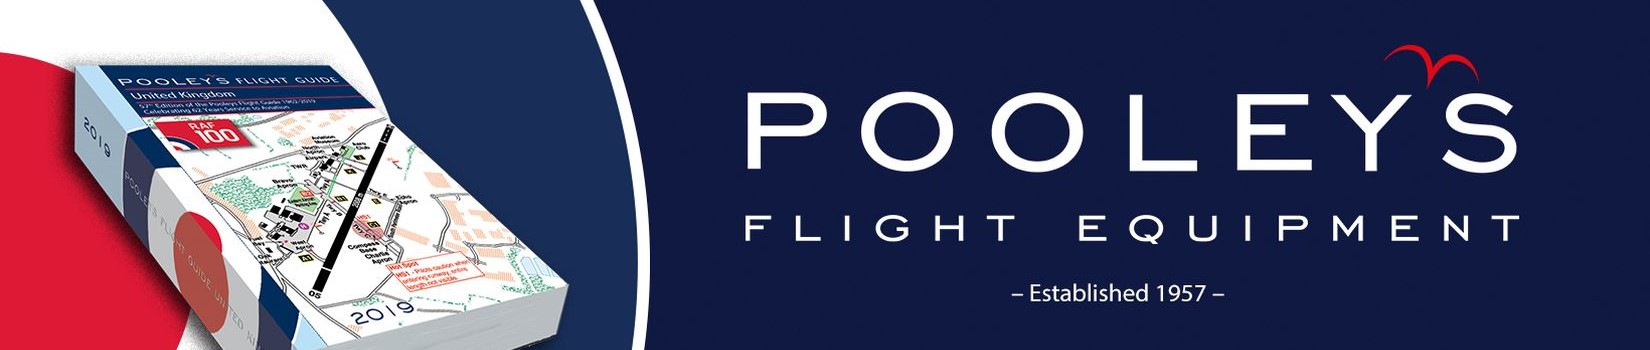 Pooleys Flight Equipment